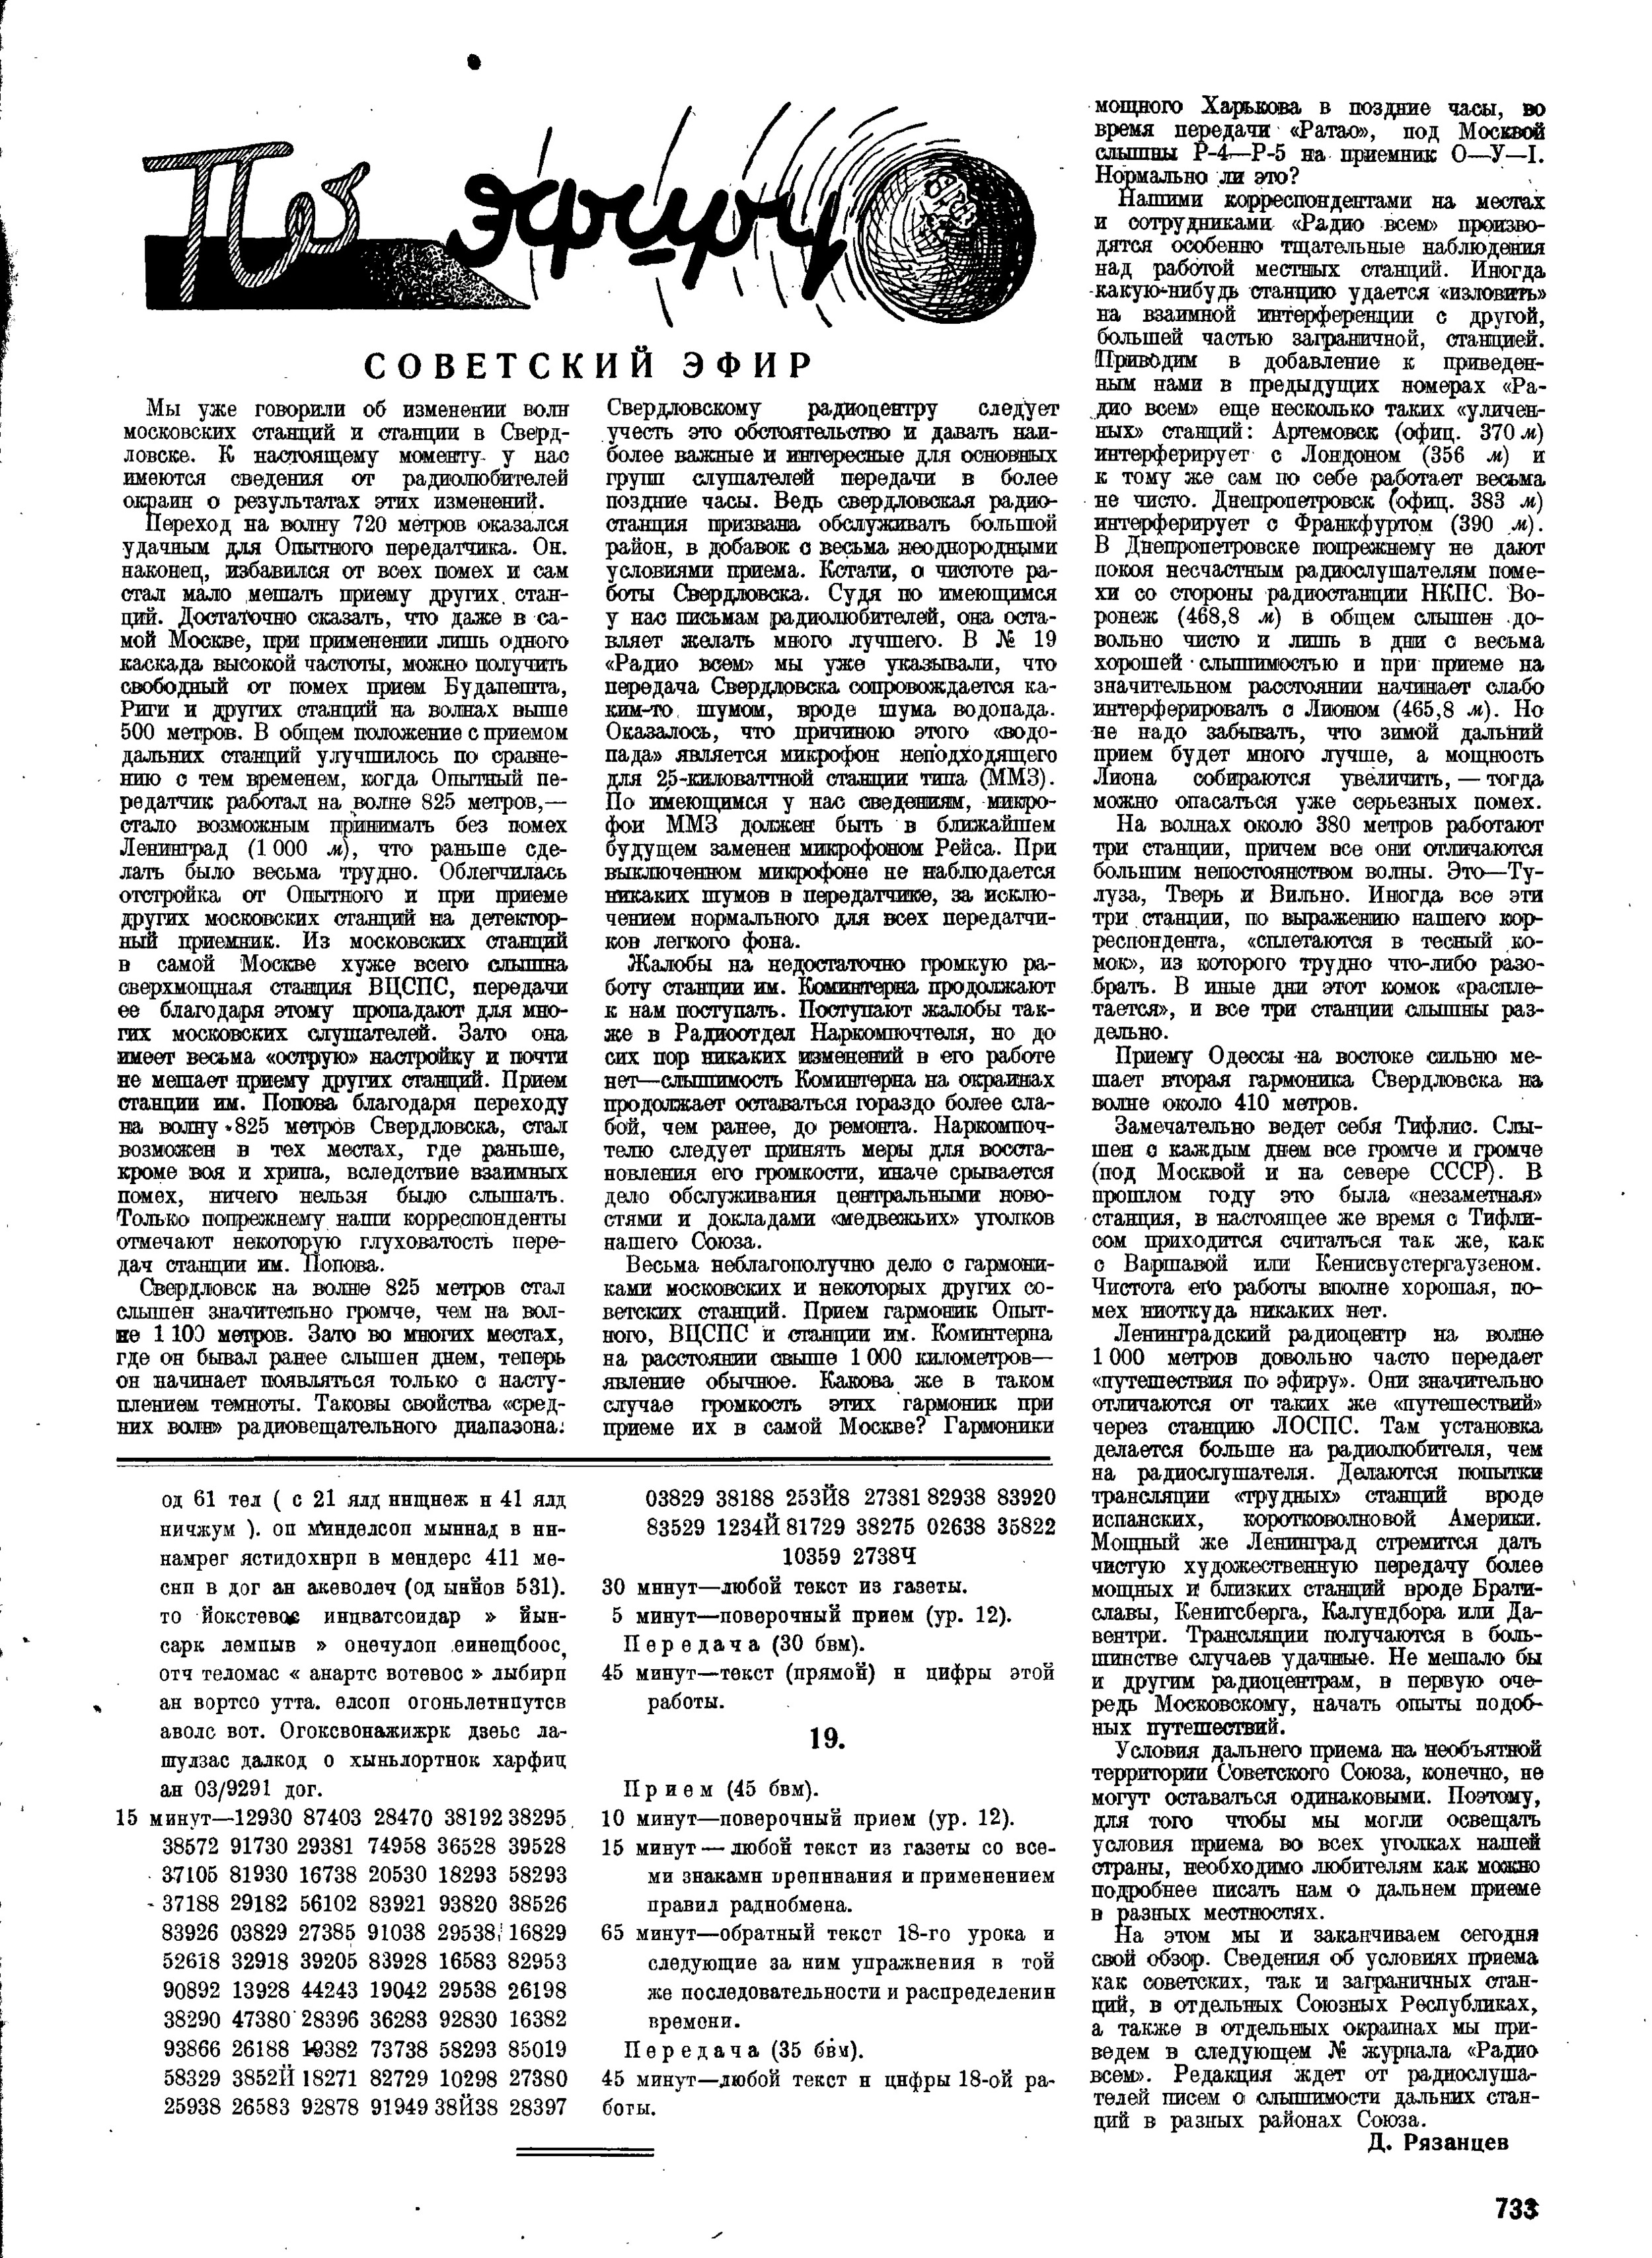 Стр. 29 (733) журнала «Радио всем» № 24 за 1929 год (крупно)